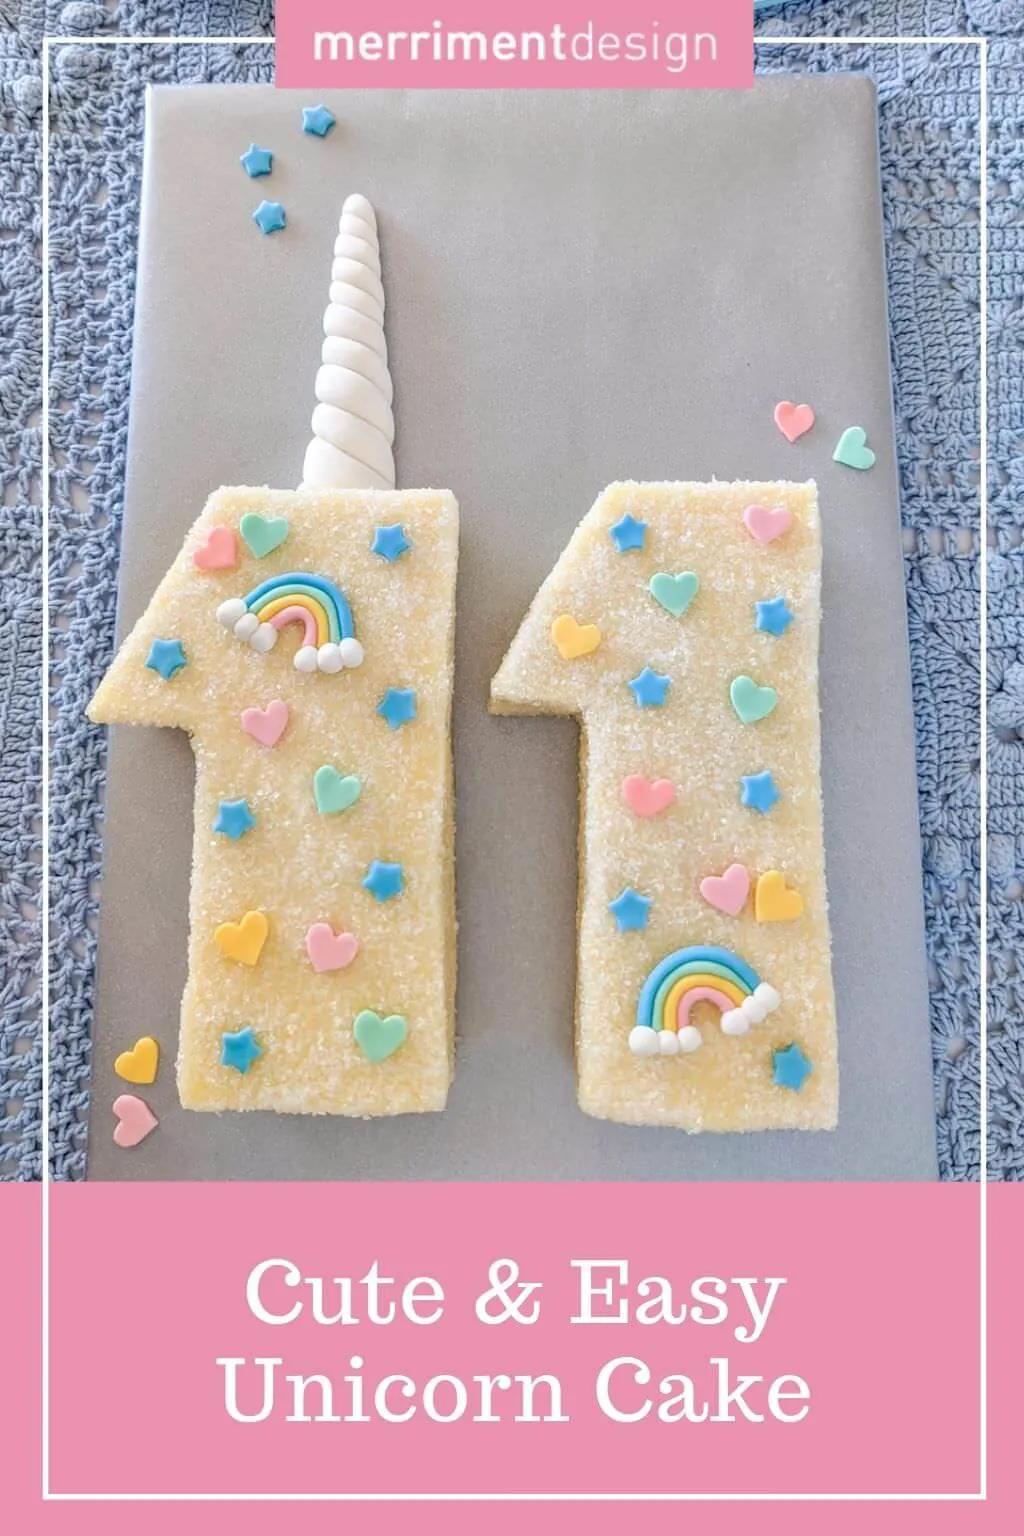 Cute and easy unicorn cake DIY